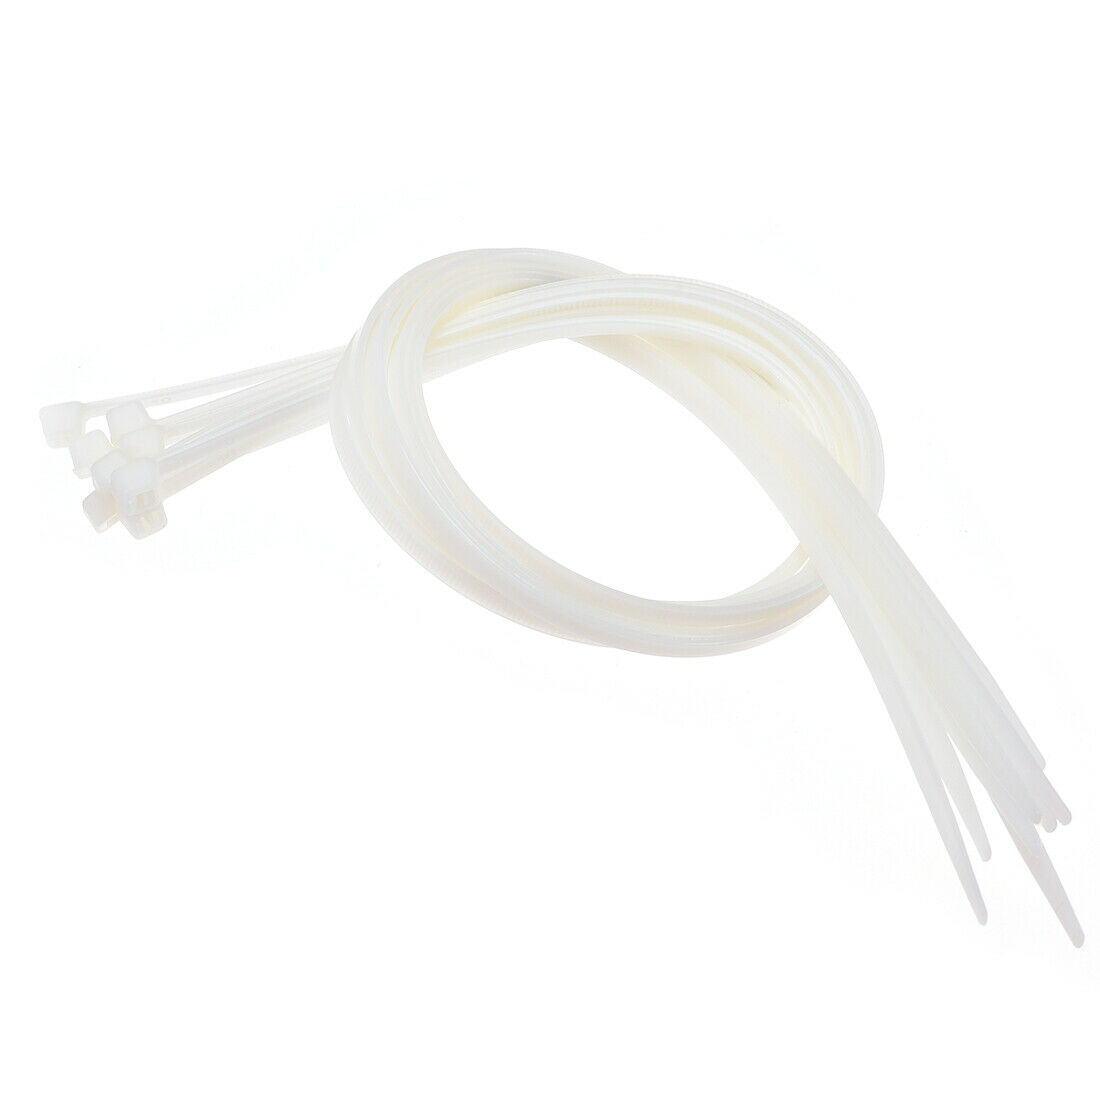 Cable Zip Ties 350mmx3.6mm Self-locking Nylon Tie Wraps White 150pcs